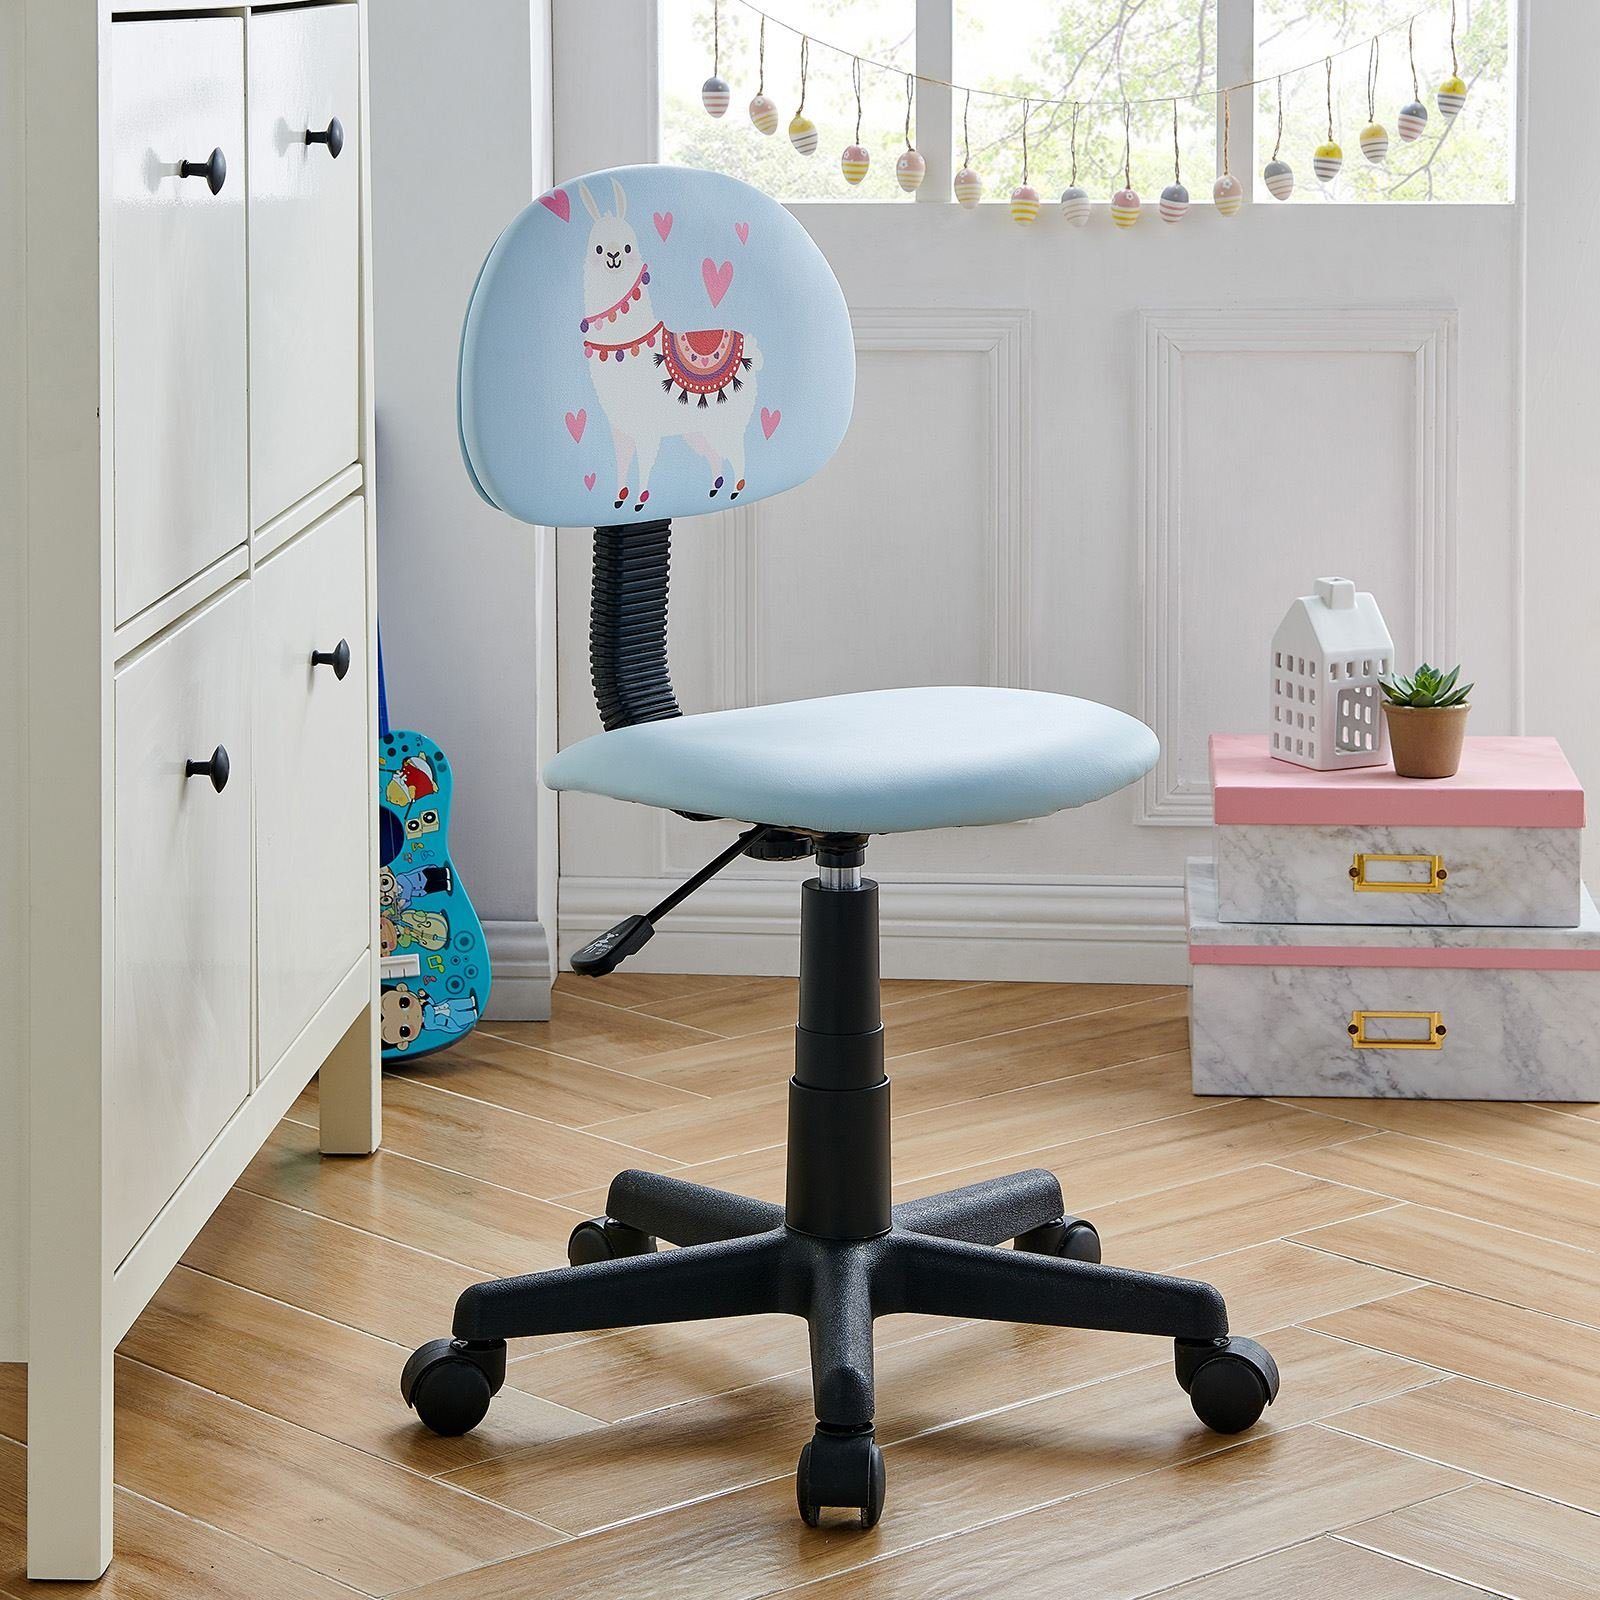 ALPACA, mit Kinder hellbllau Bezug Kunstleder CARO-Möbel für höhenverstellbar Kinderdrehs Drehstuhl Drehstuhl